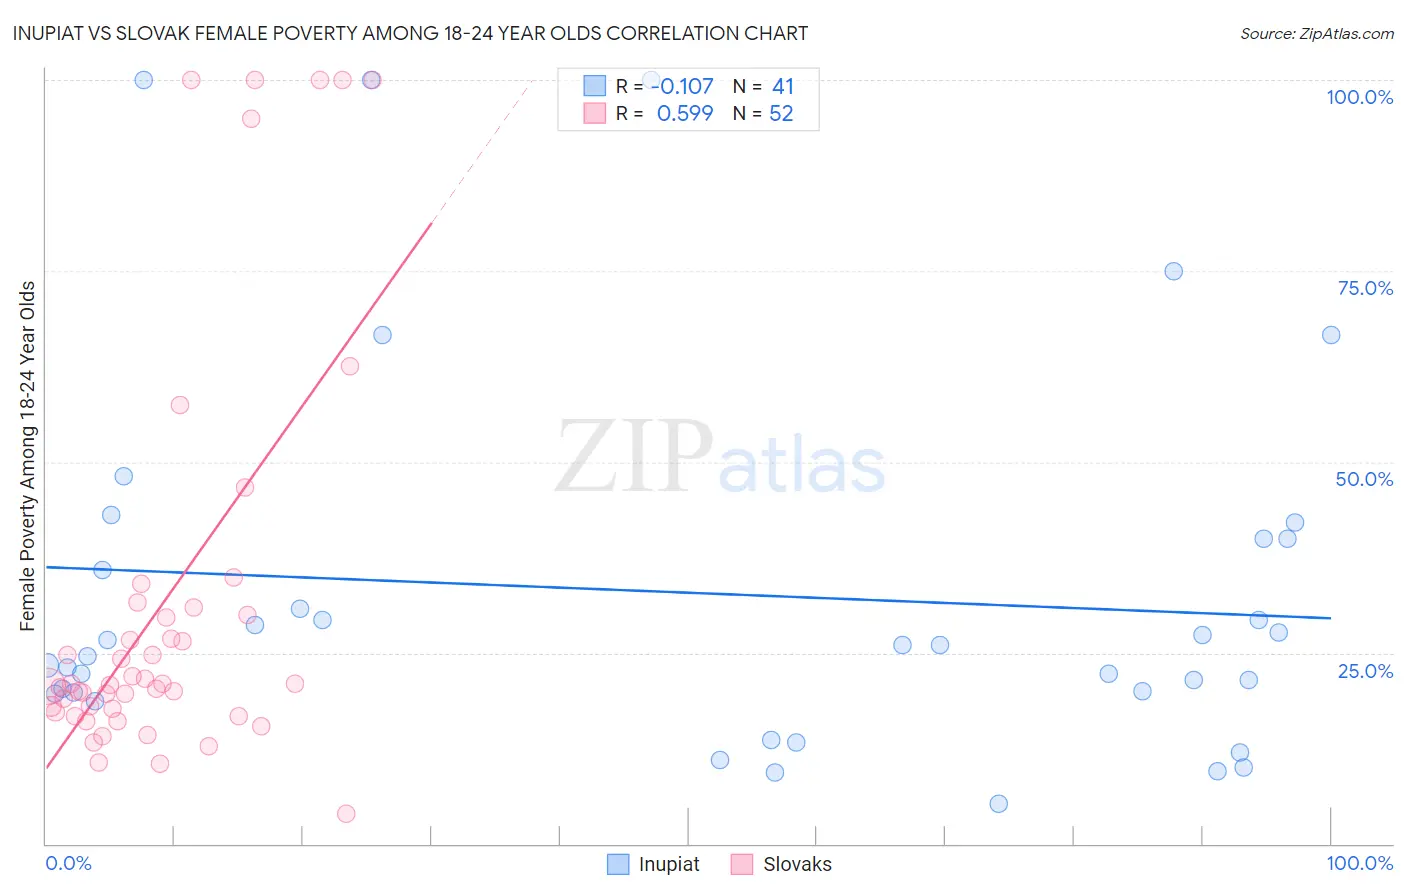 Inupiat vs Slovak Female Poverty Among 18-24 Year Olds